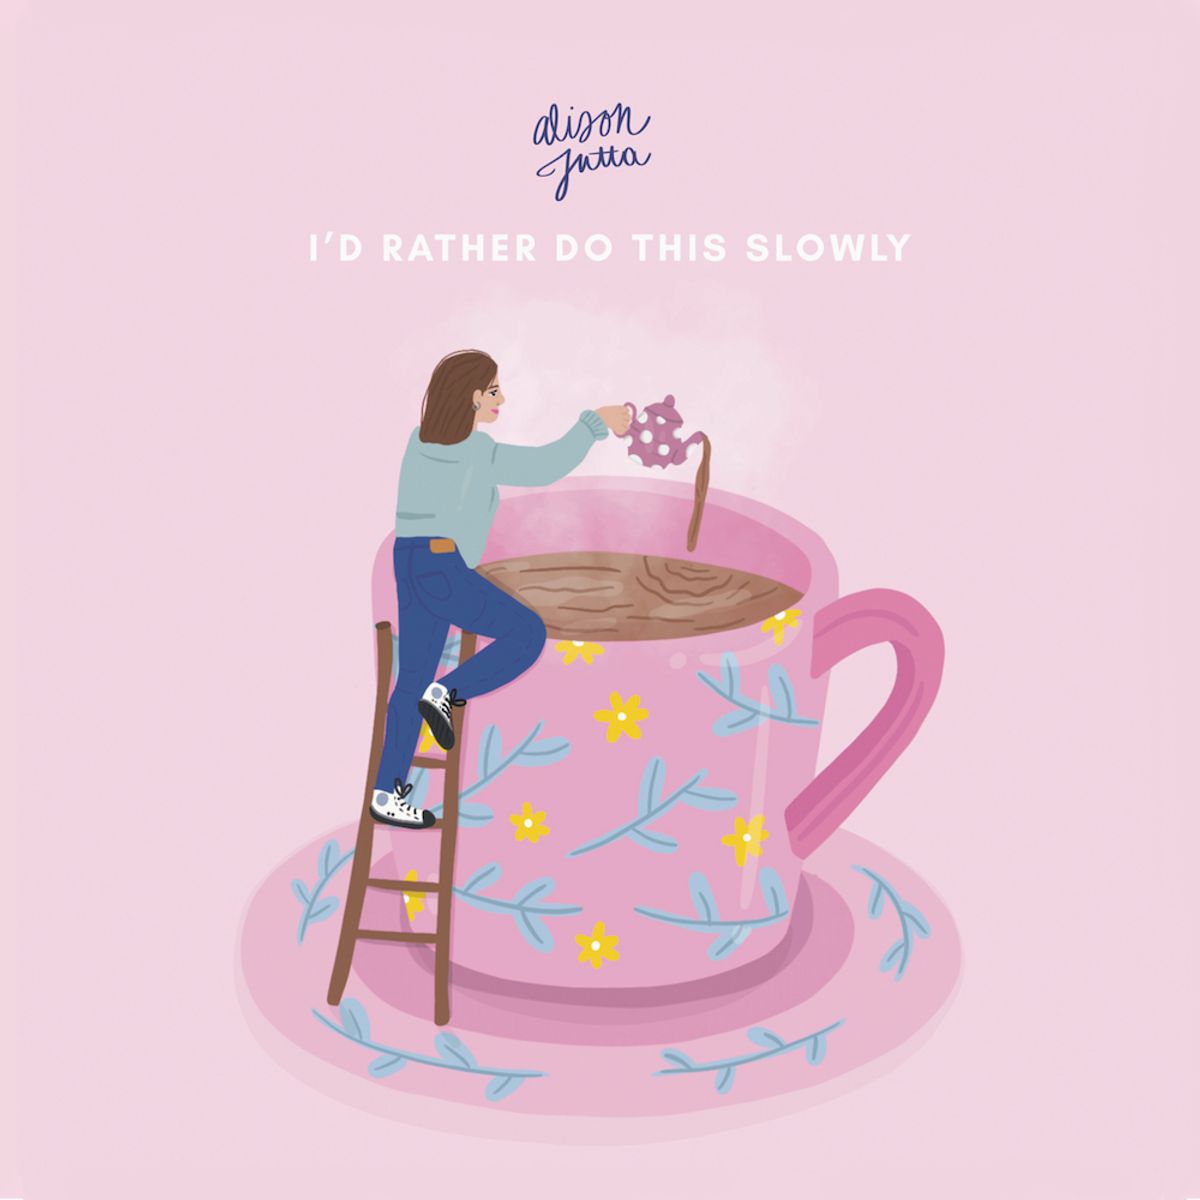 Alison Jutta - 'I'd Rather Do This Slowly'